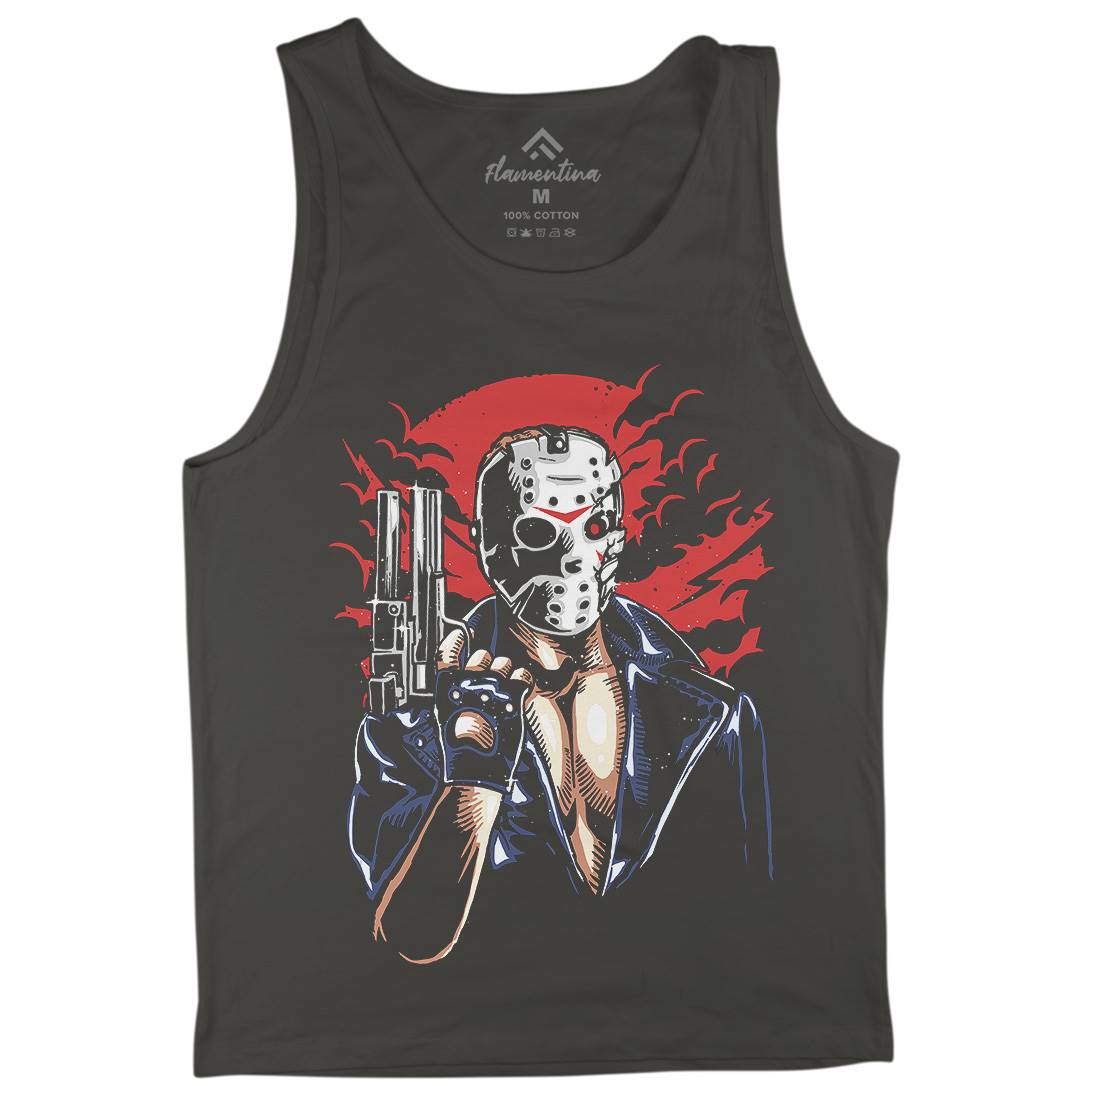 Jason Mens Tank Top Vest Horror A548